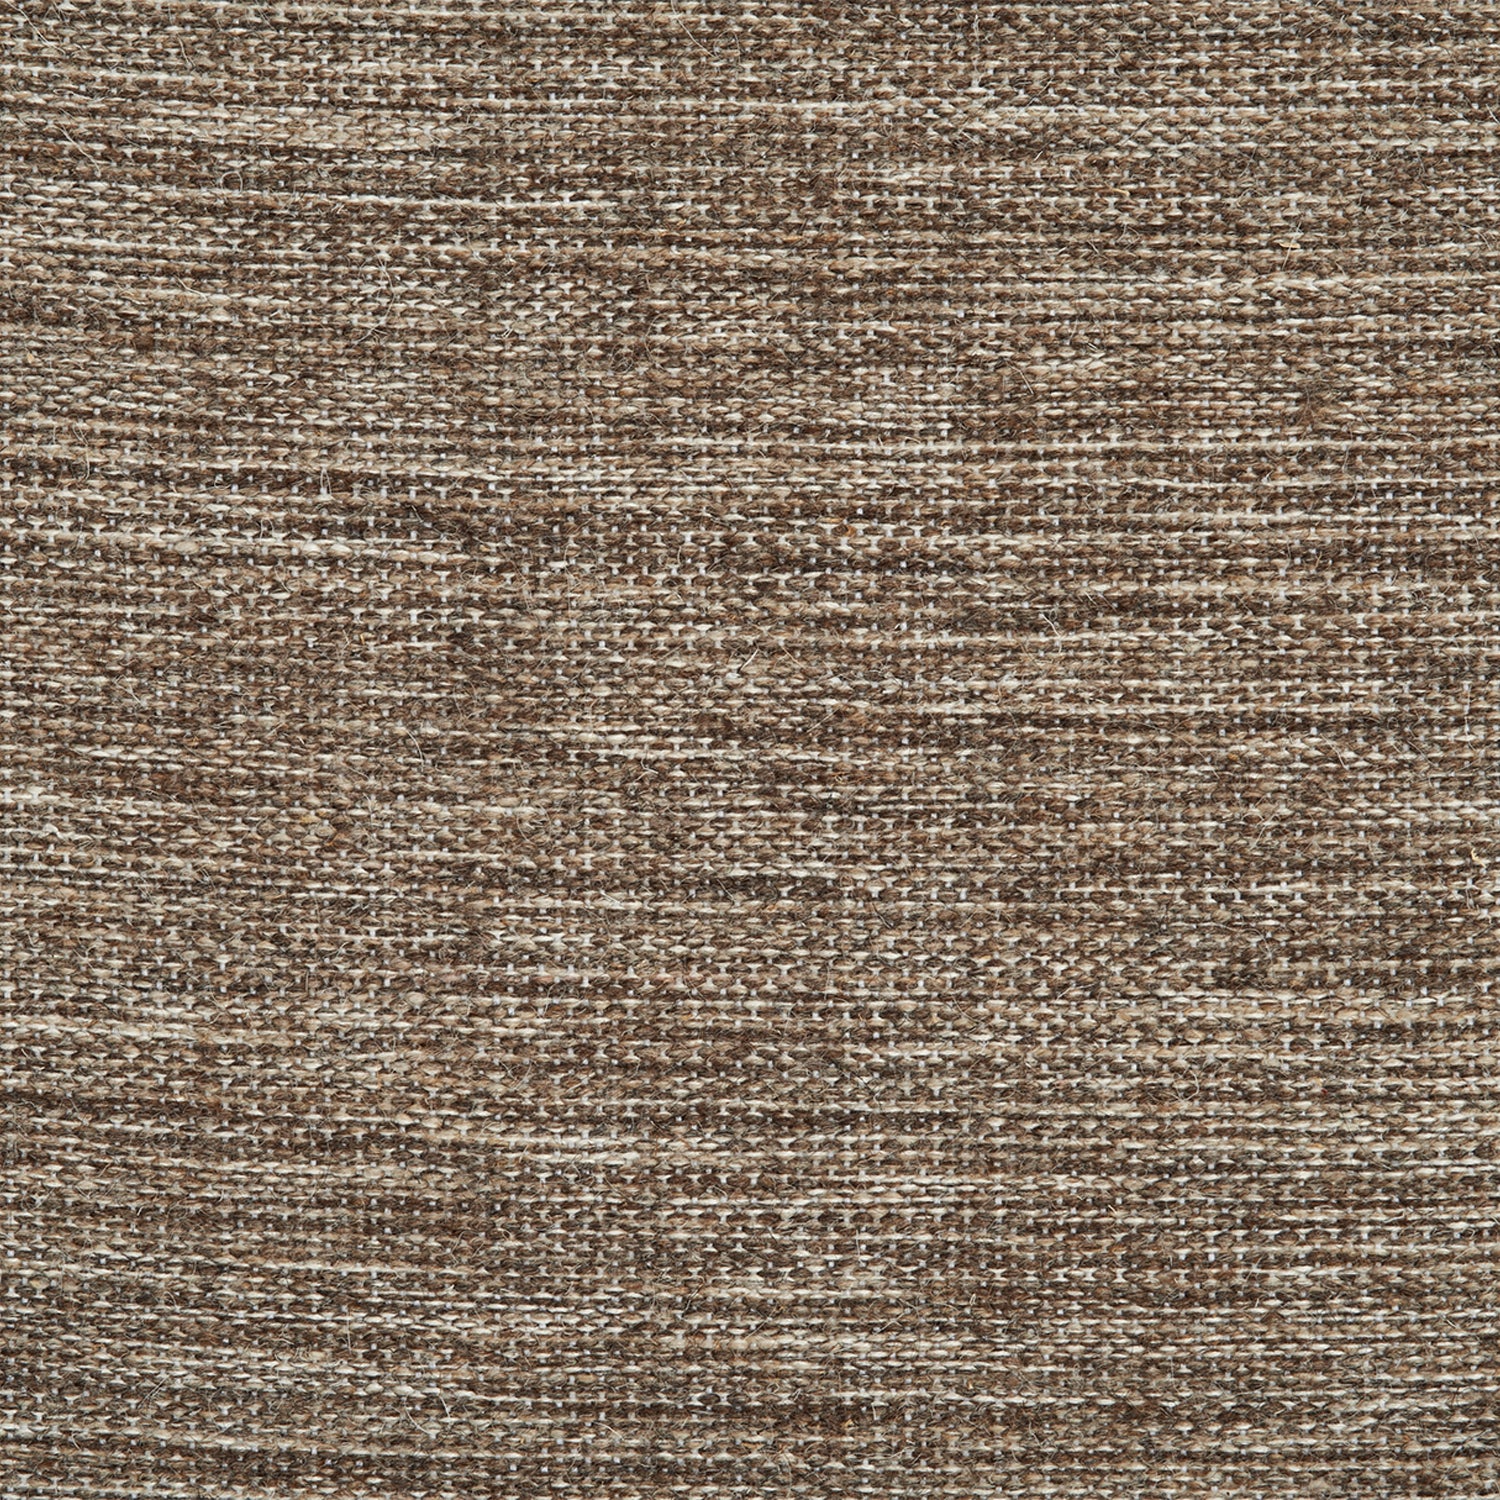 Wool-blend broadloom carpet swatch in a chunky mottled brown weave.